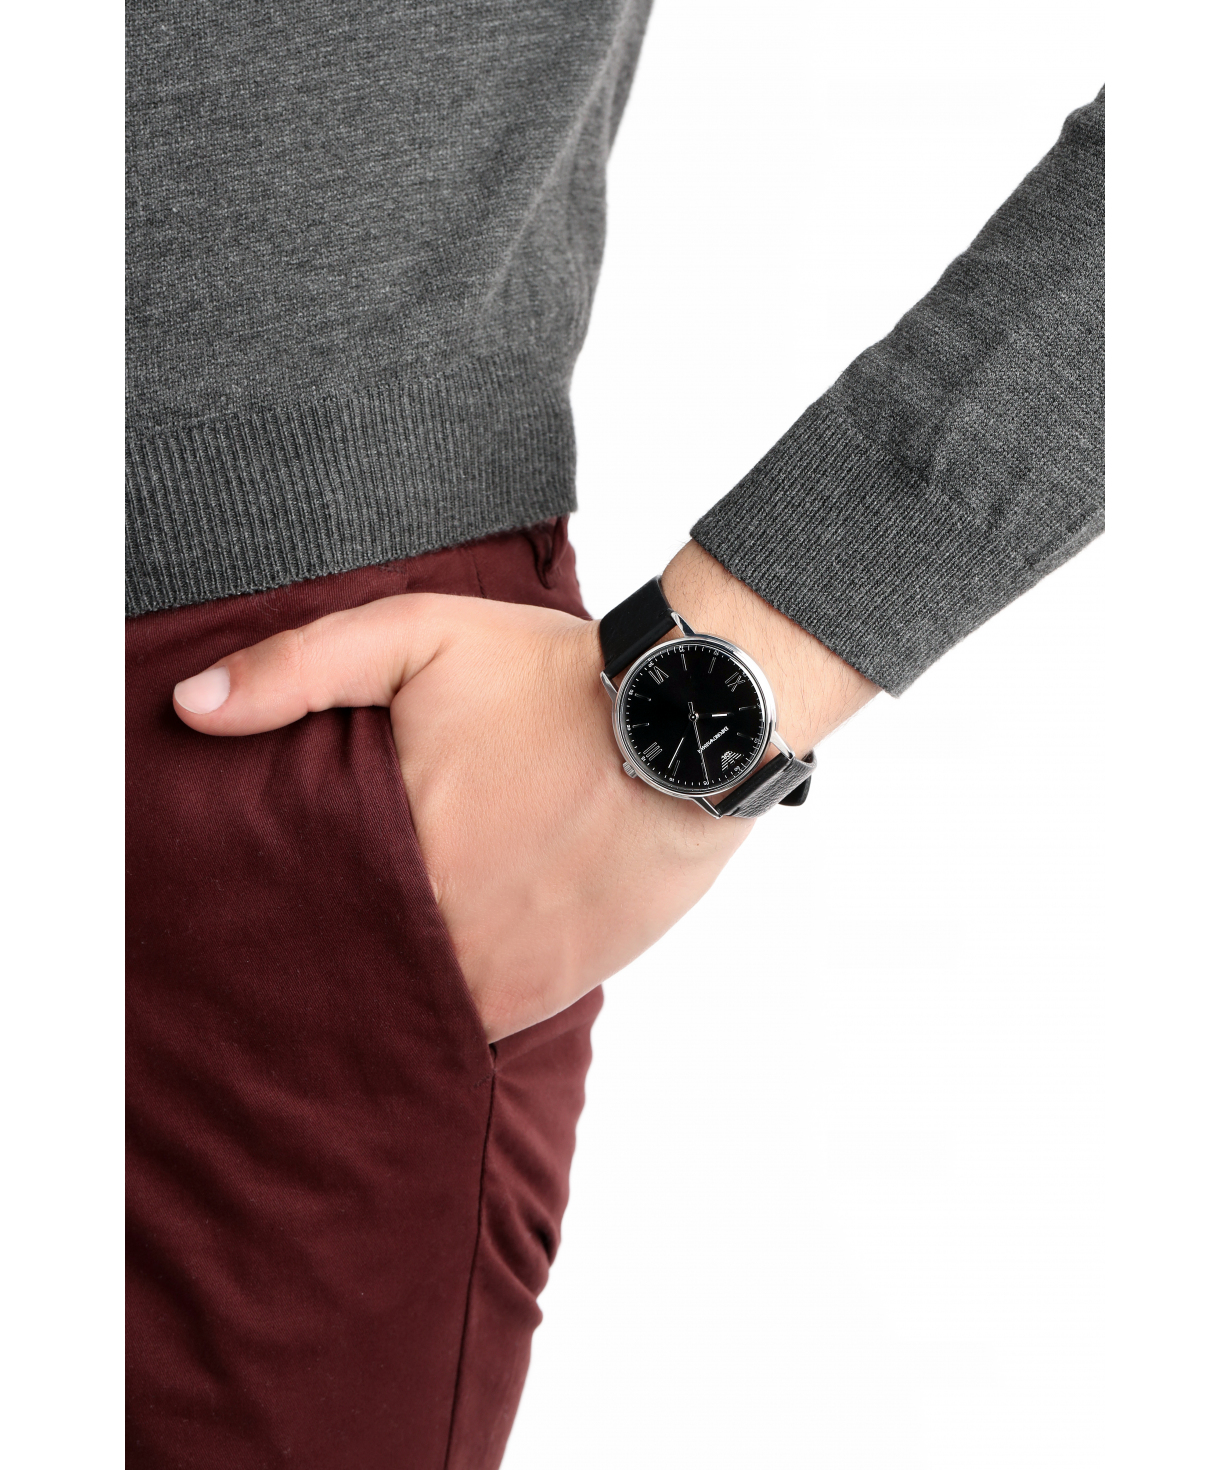 Ժամացույց  «Emporio Armani» ձեռքի  AR11013